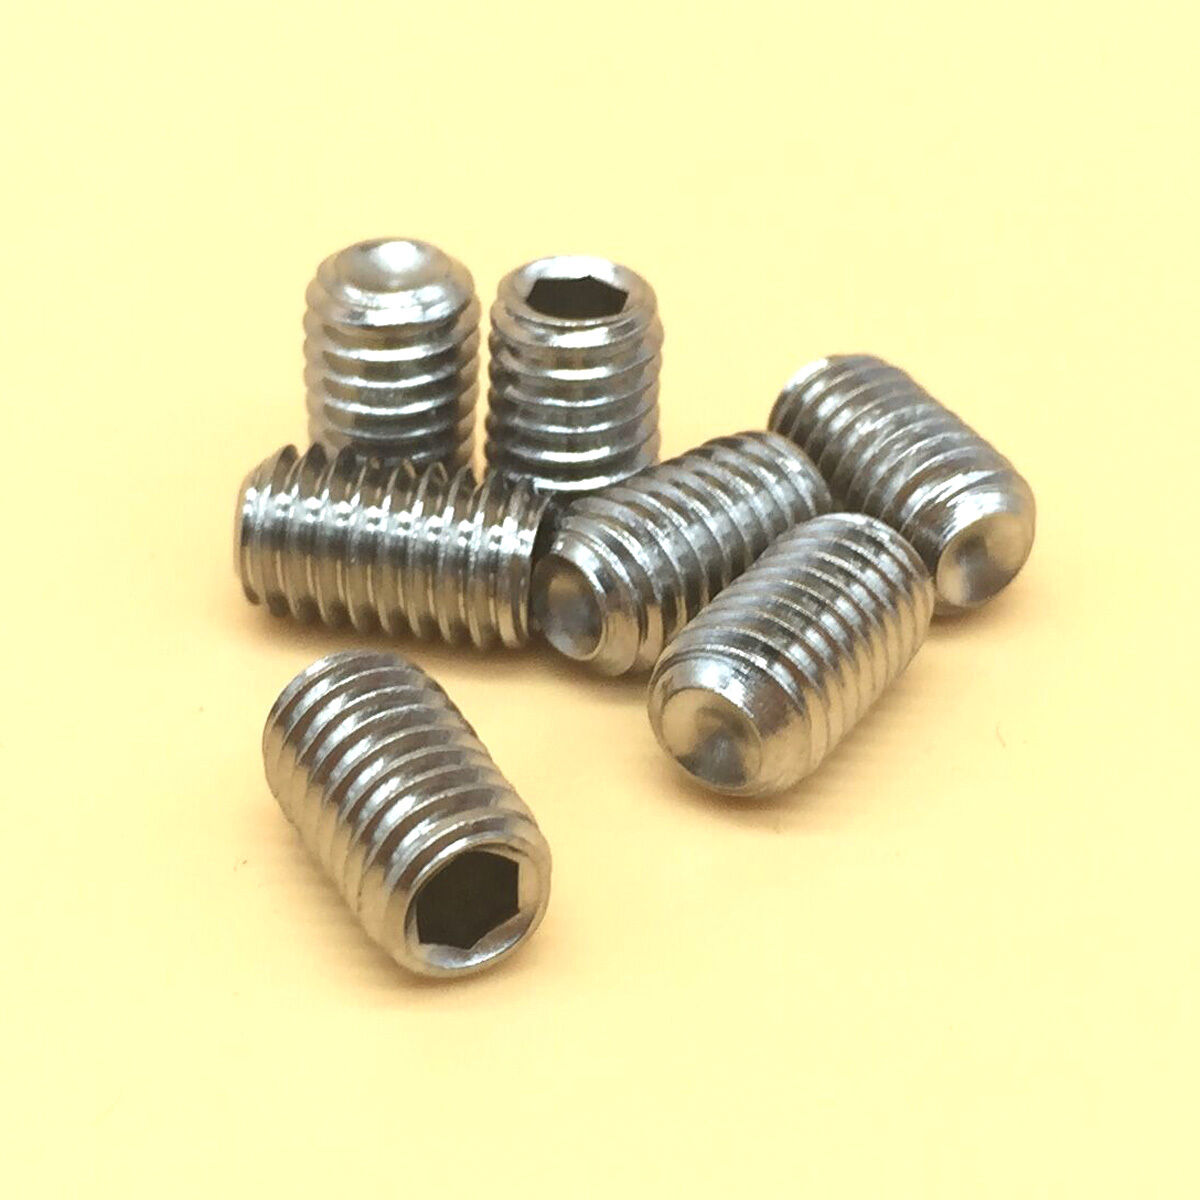 100Pcs Stainless Steel 1/4 5/16 3/8 Allen Head Hex Socket Screws Assortment Kit